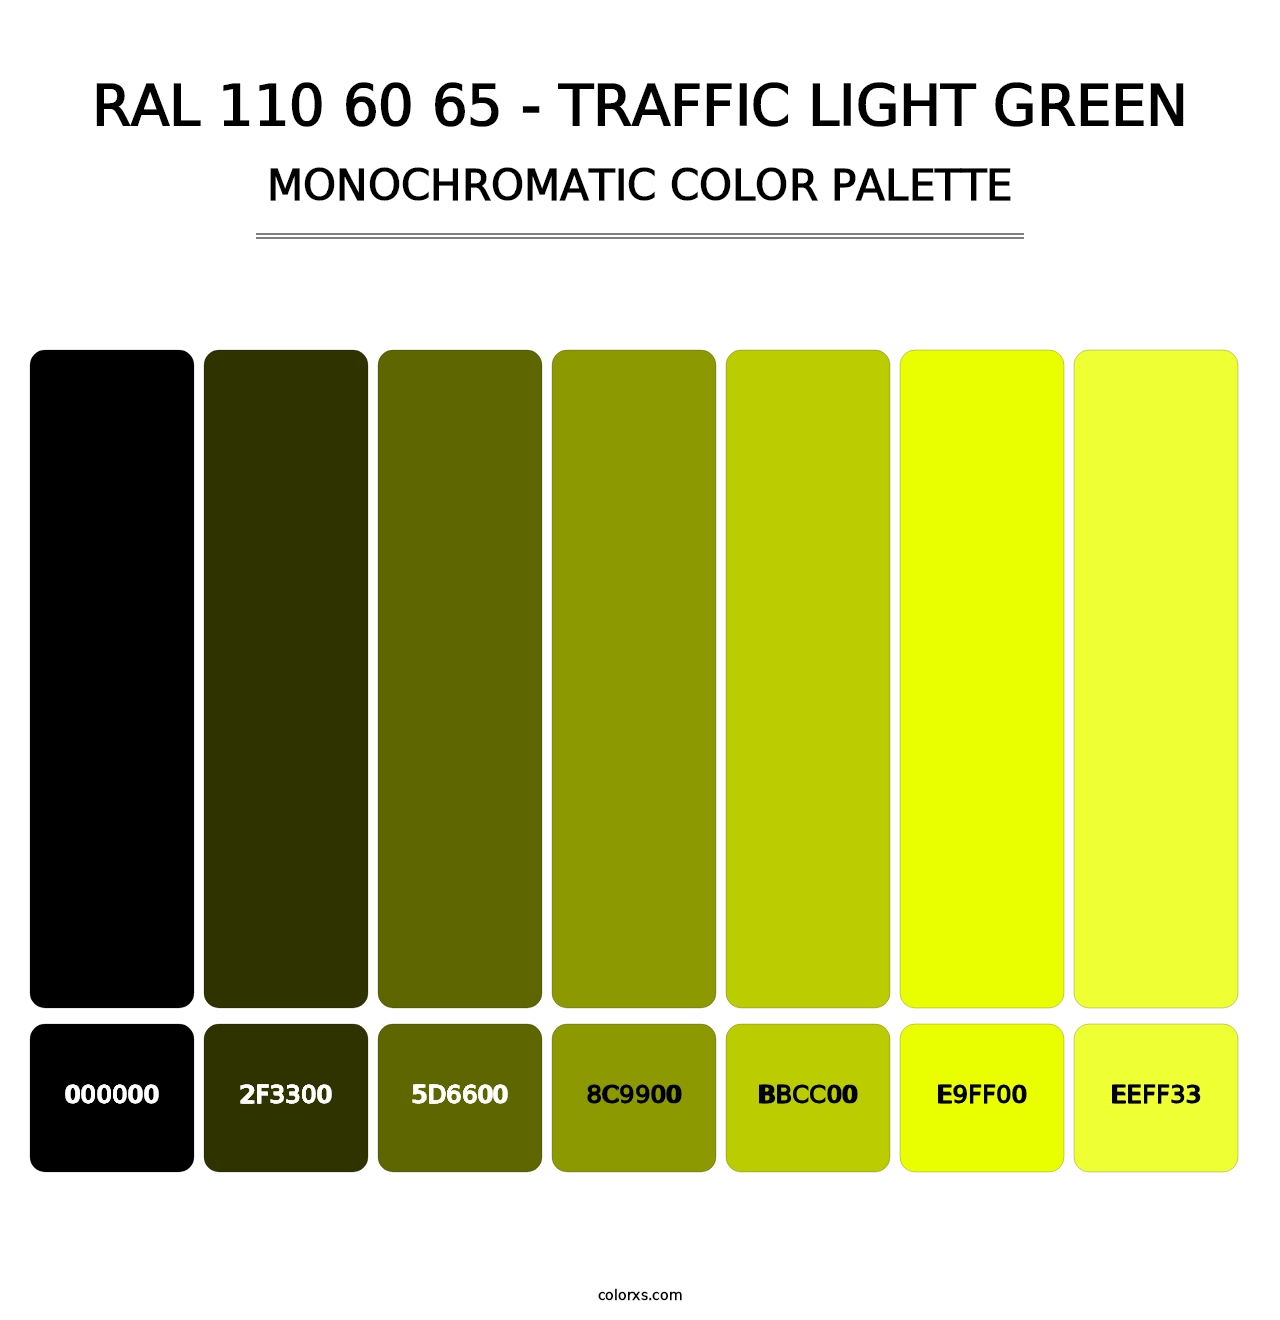 RAL 110 60 65 - Traffic Light Green - Monochromatic Color Palette